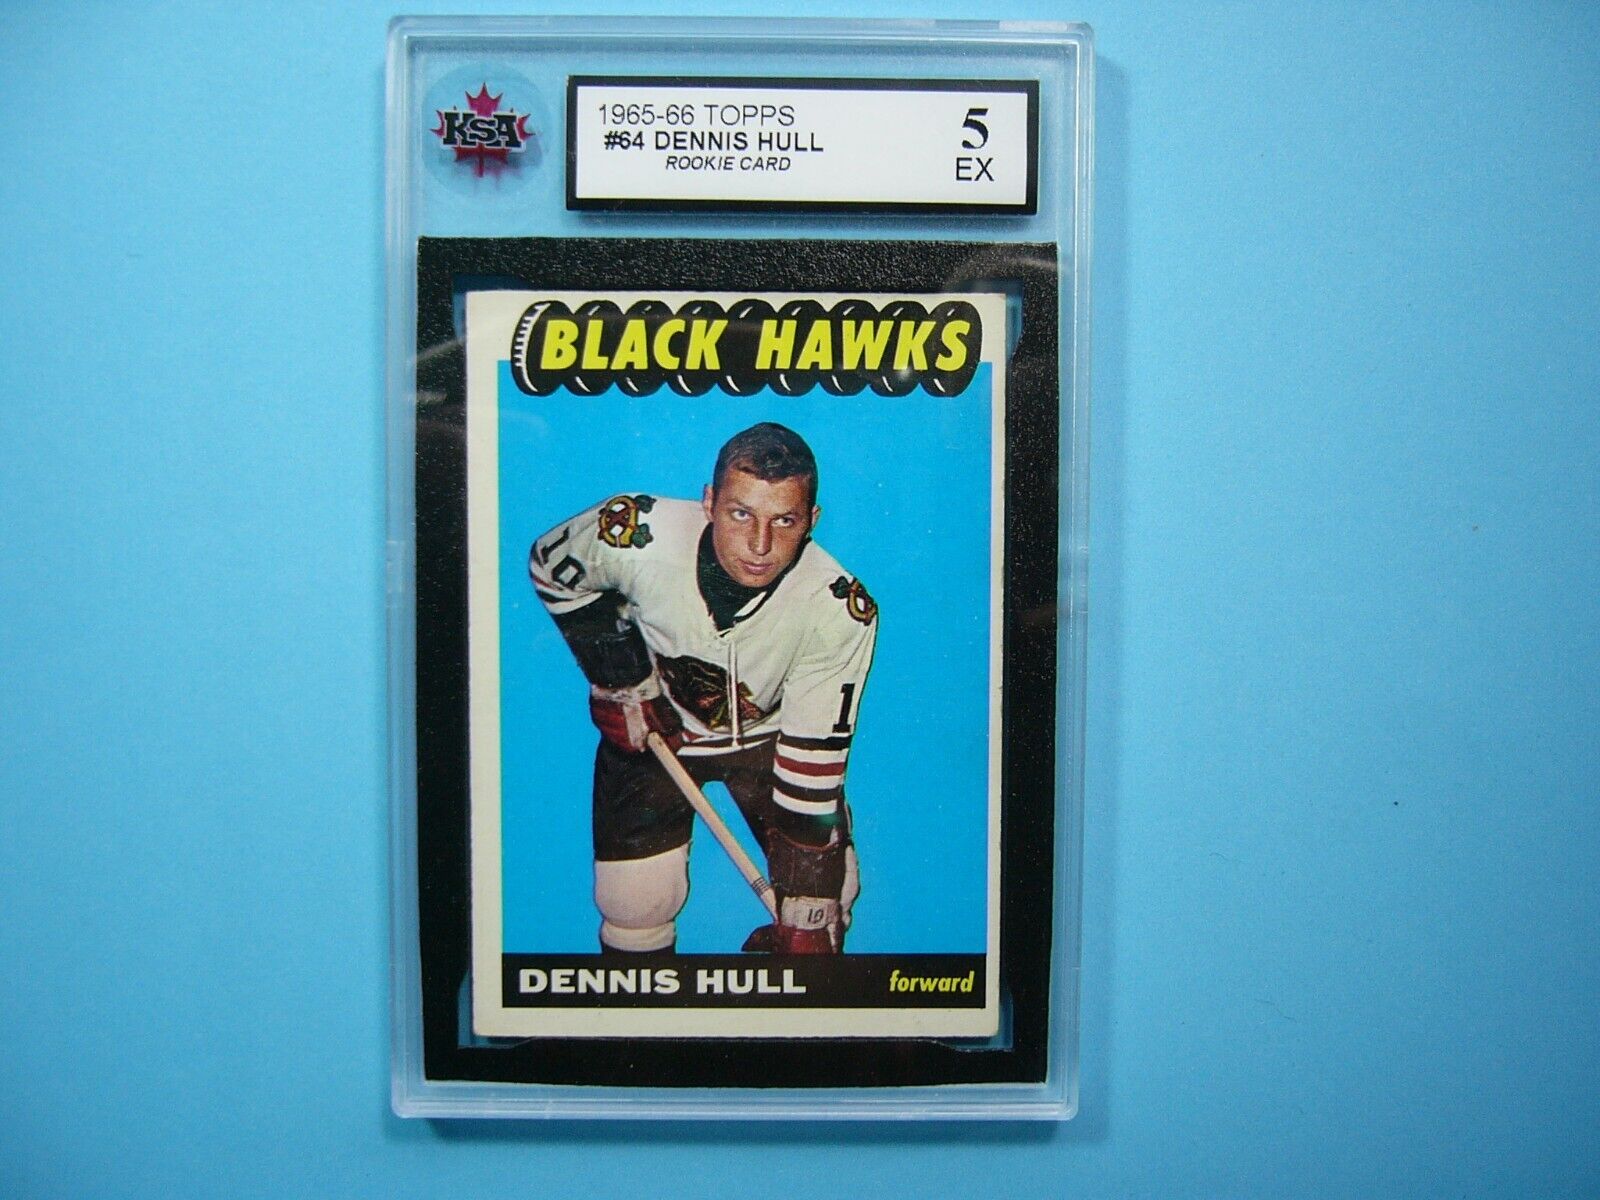 1965/66 TOPPS NHL HOCKEY CARD #64 DENNIS HULL ROOKIE RC KSA 5 EX SHARP TOPPS